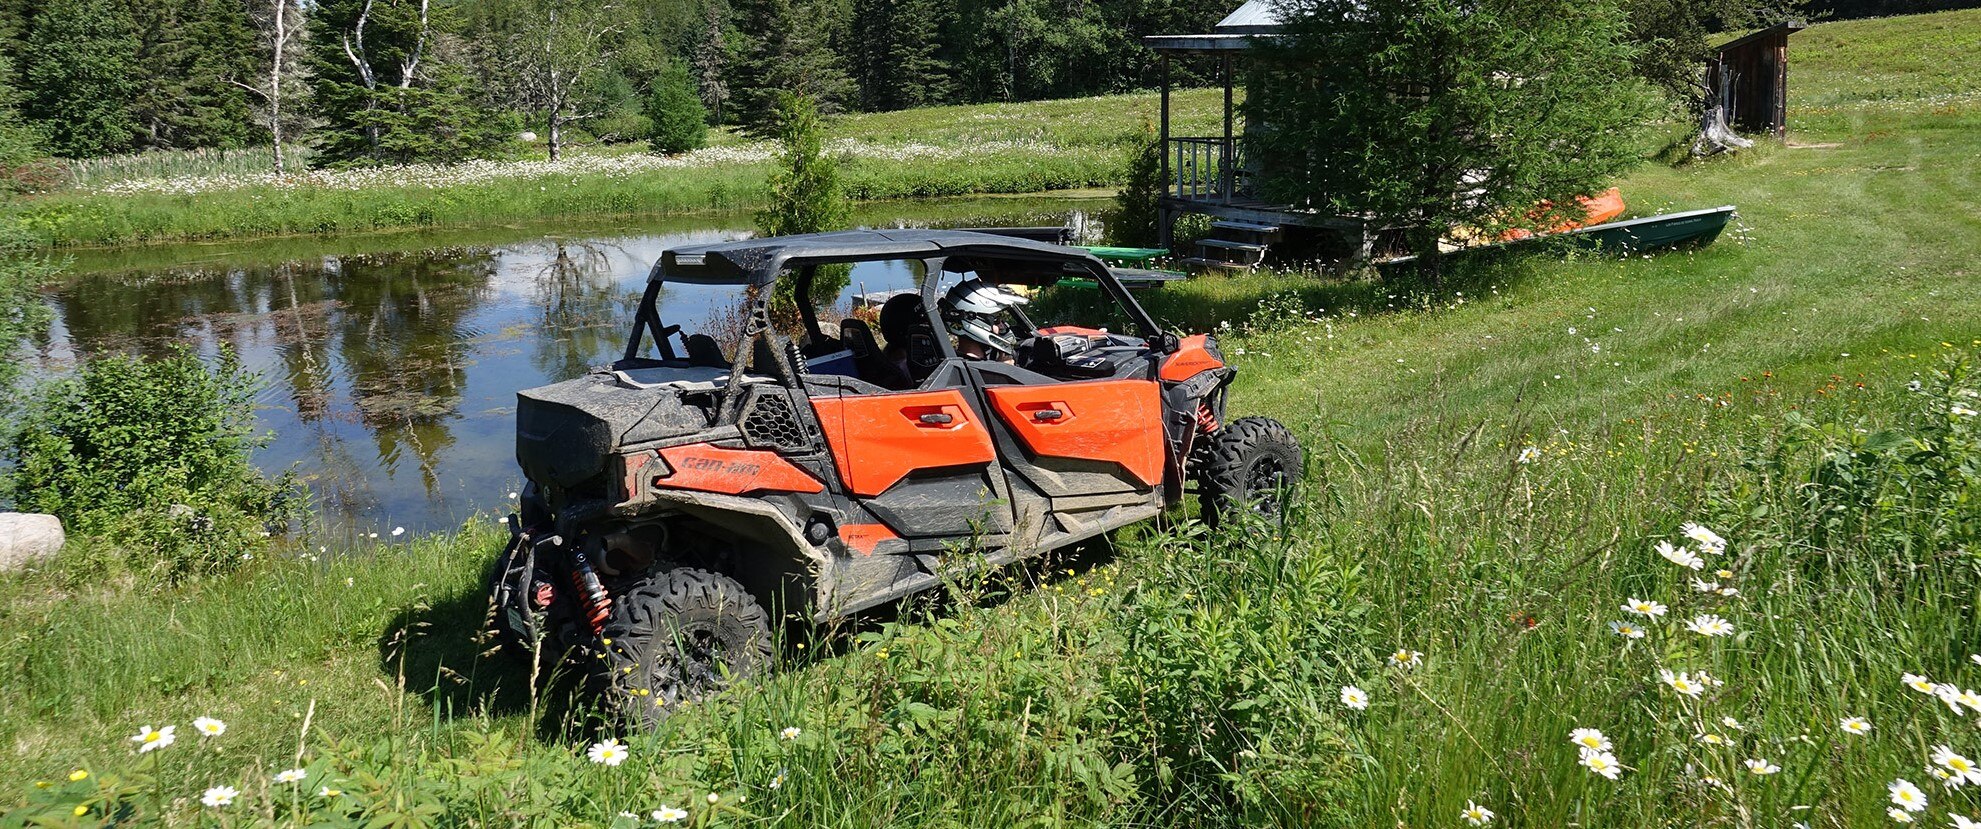 A SSV vehicle riding near a swamp